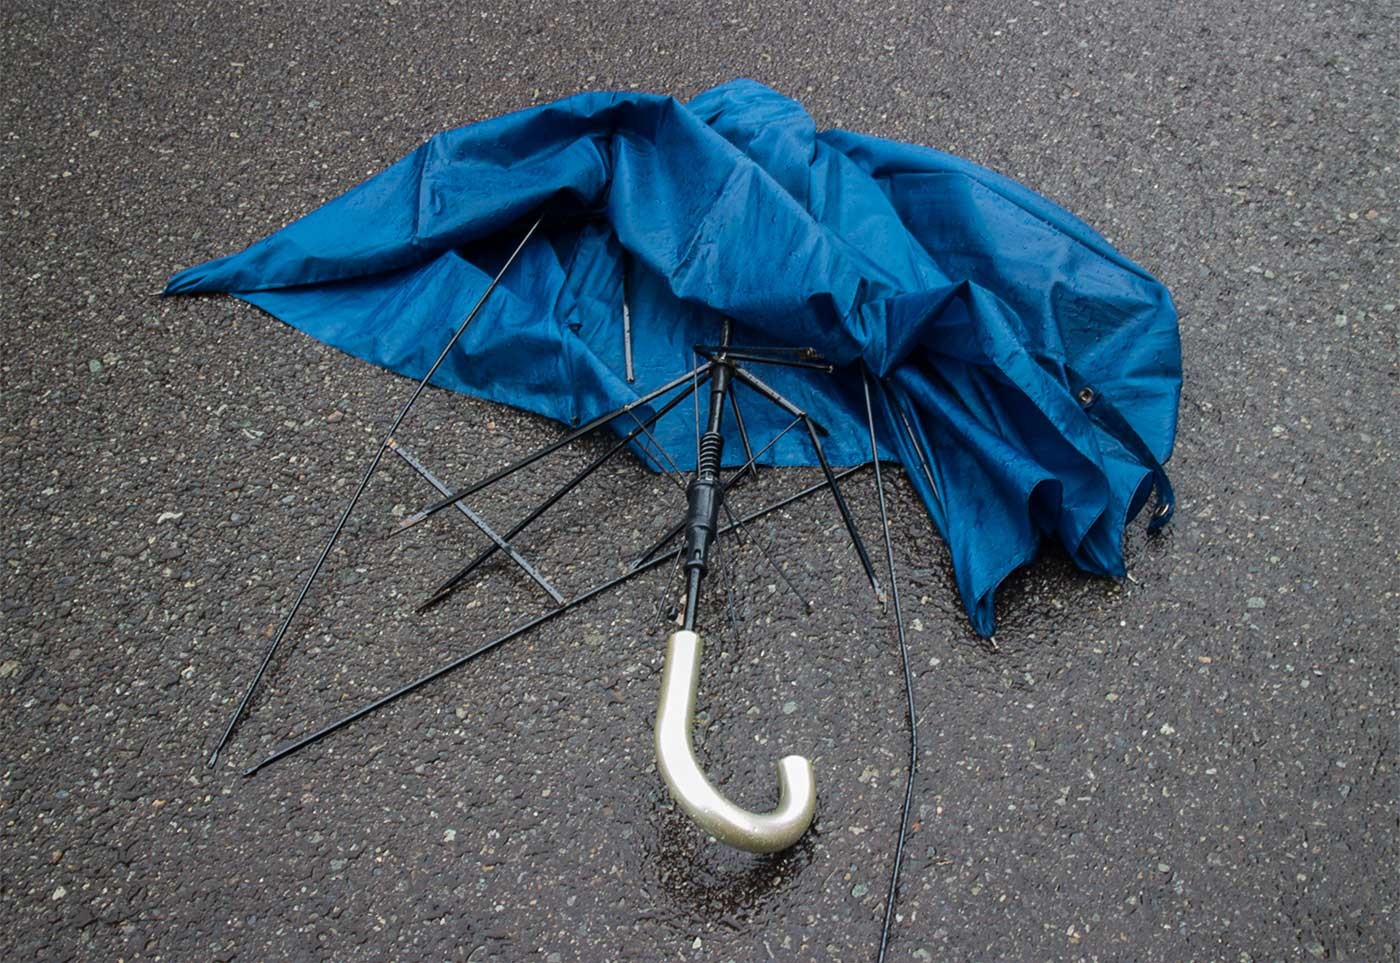 Одолжил ей зонтик